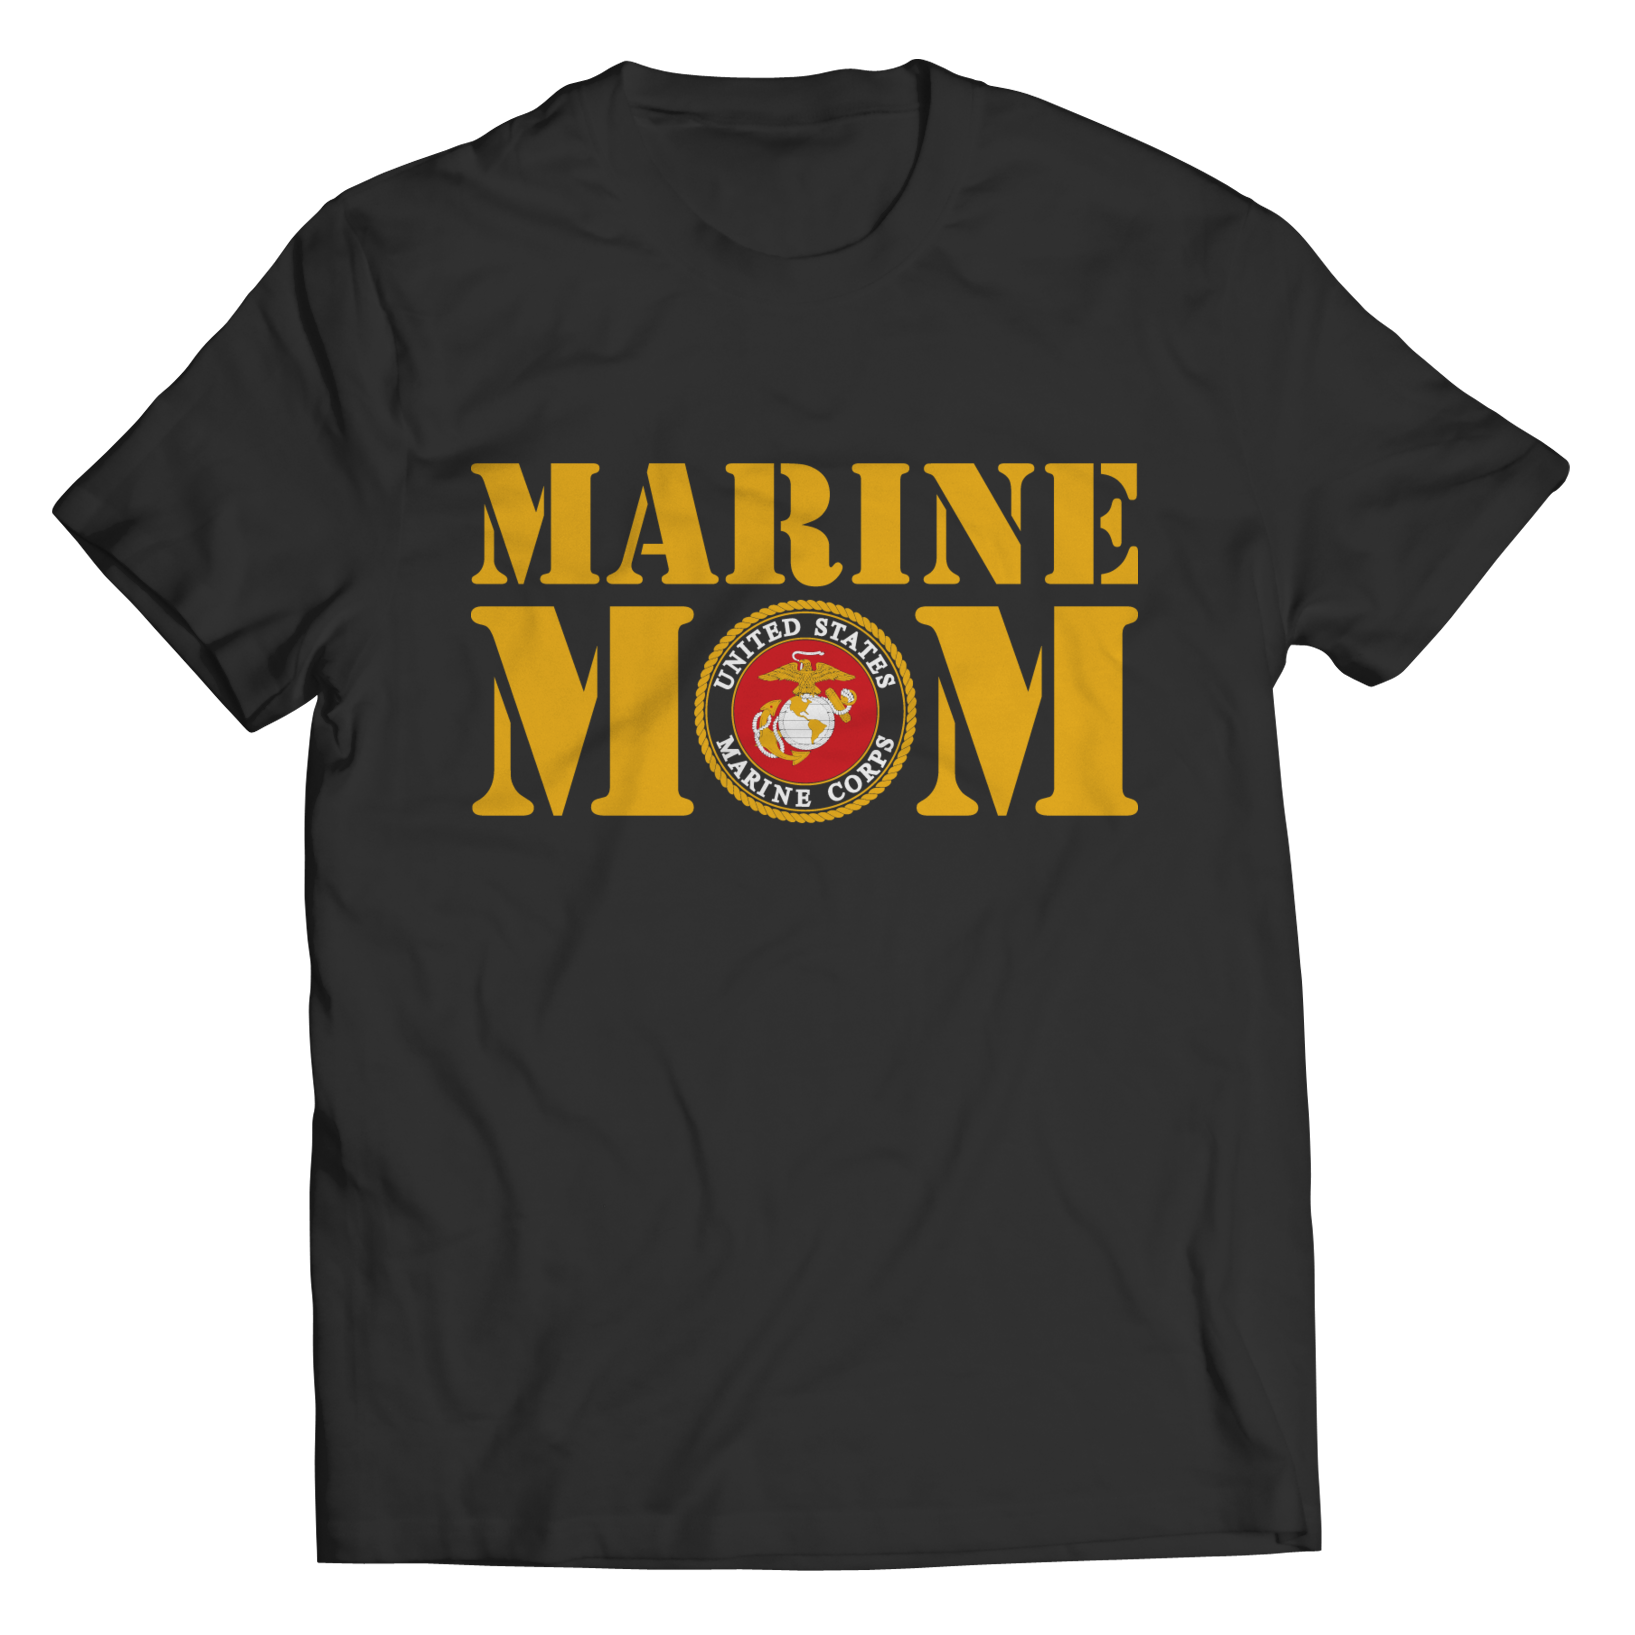 Marine Mom Unisex T-Shirt